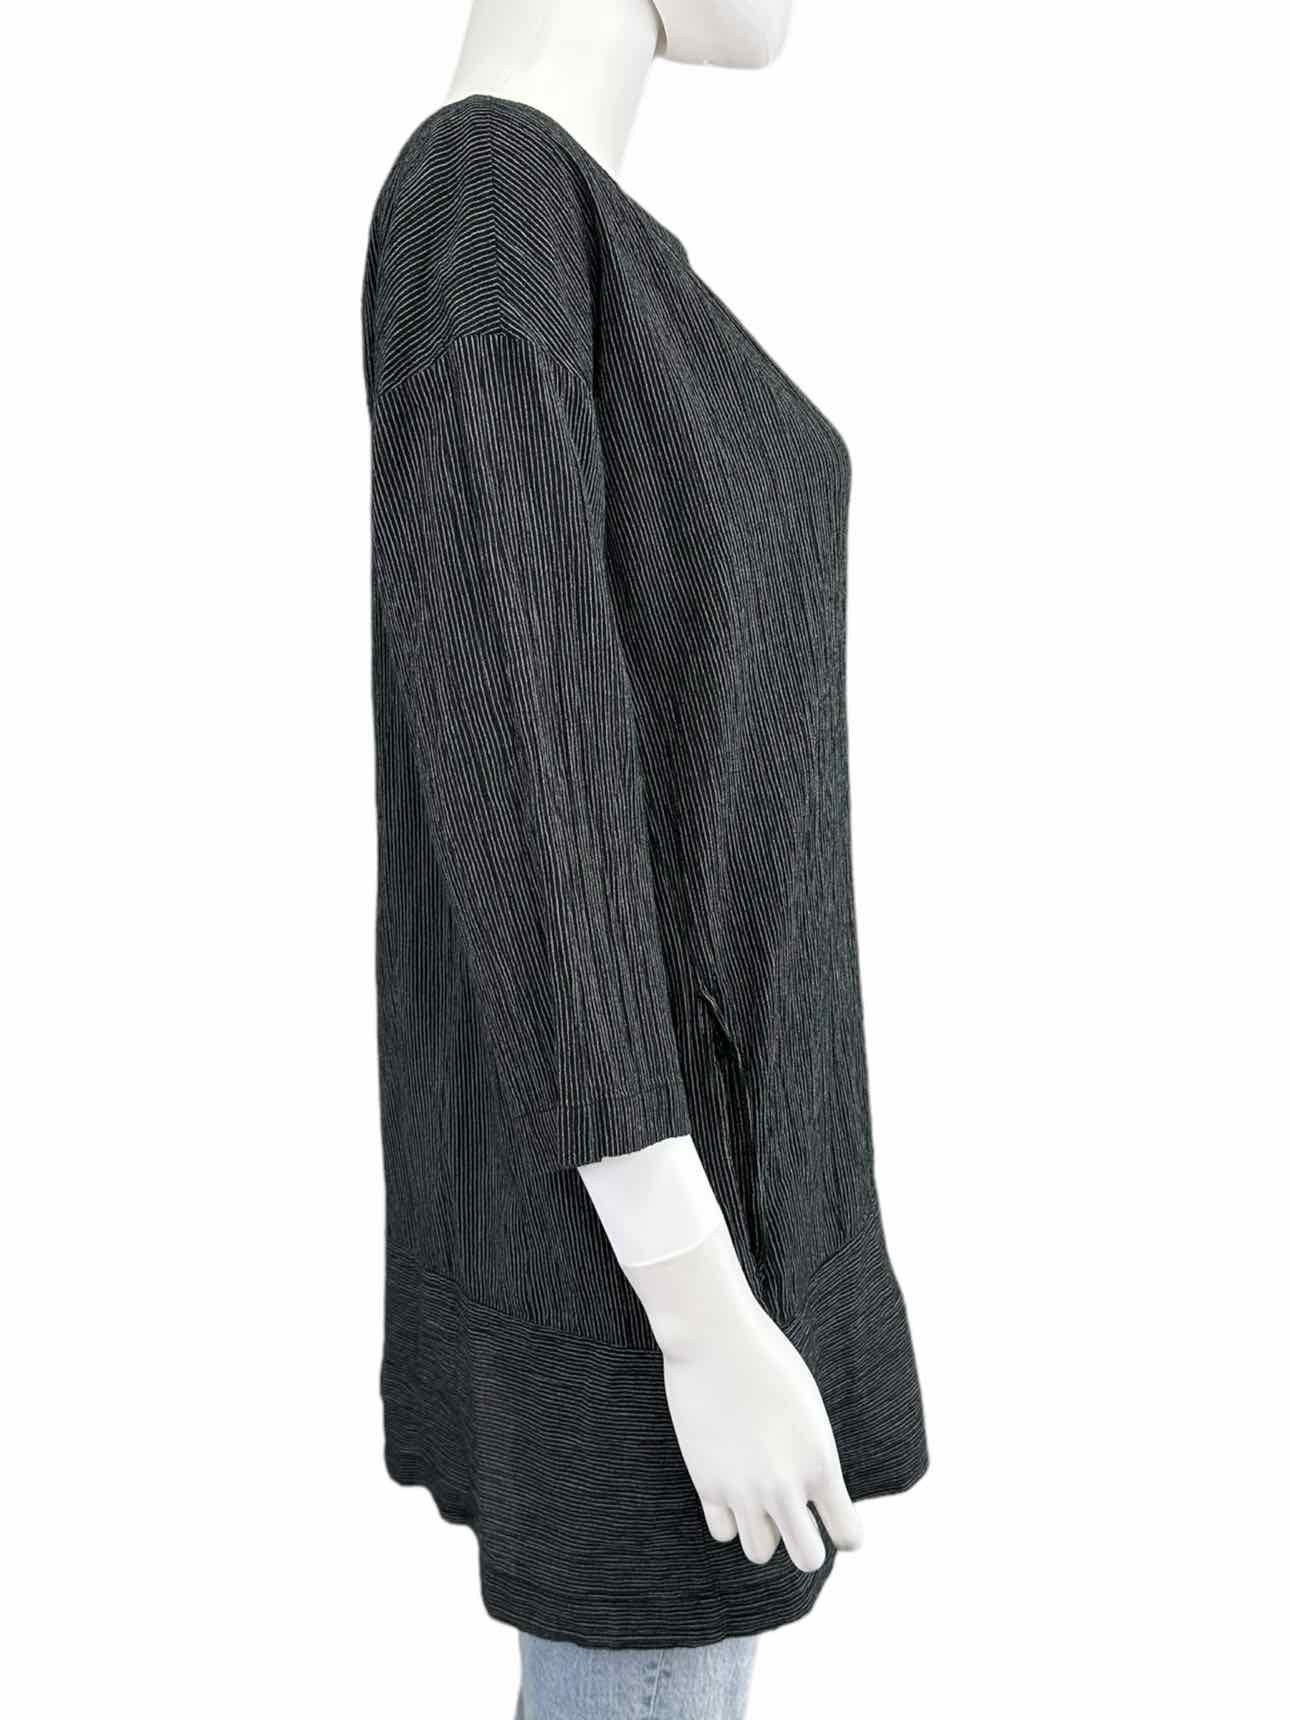 EILEEN FISHER Black Striped Organic Cotton Tunic Size XS